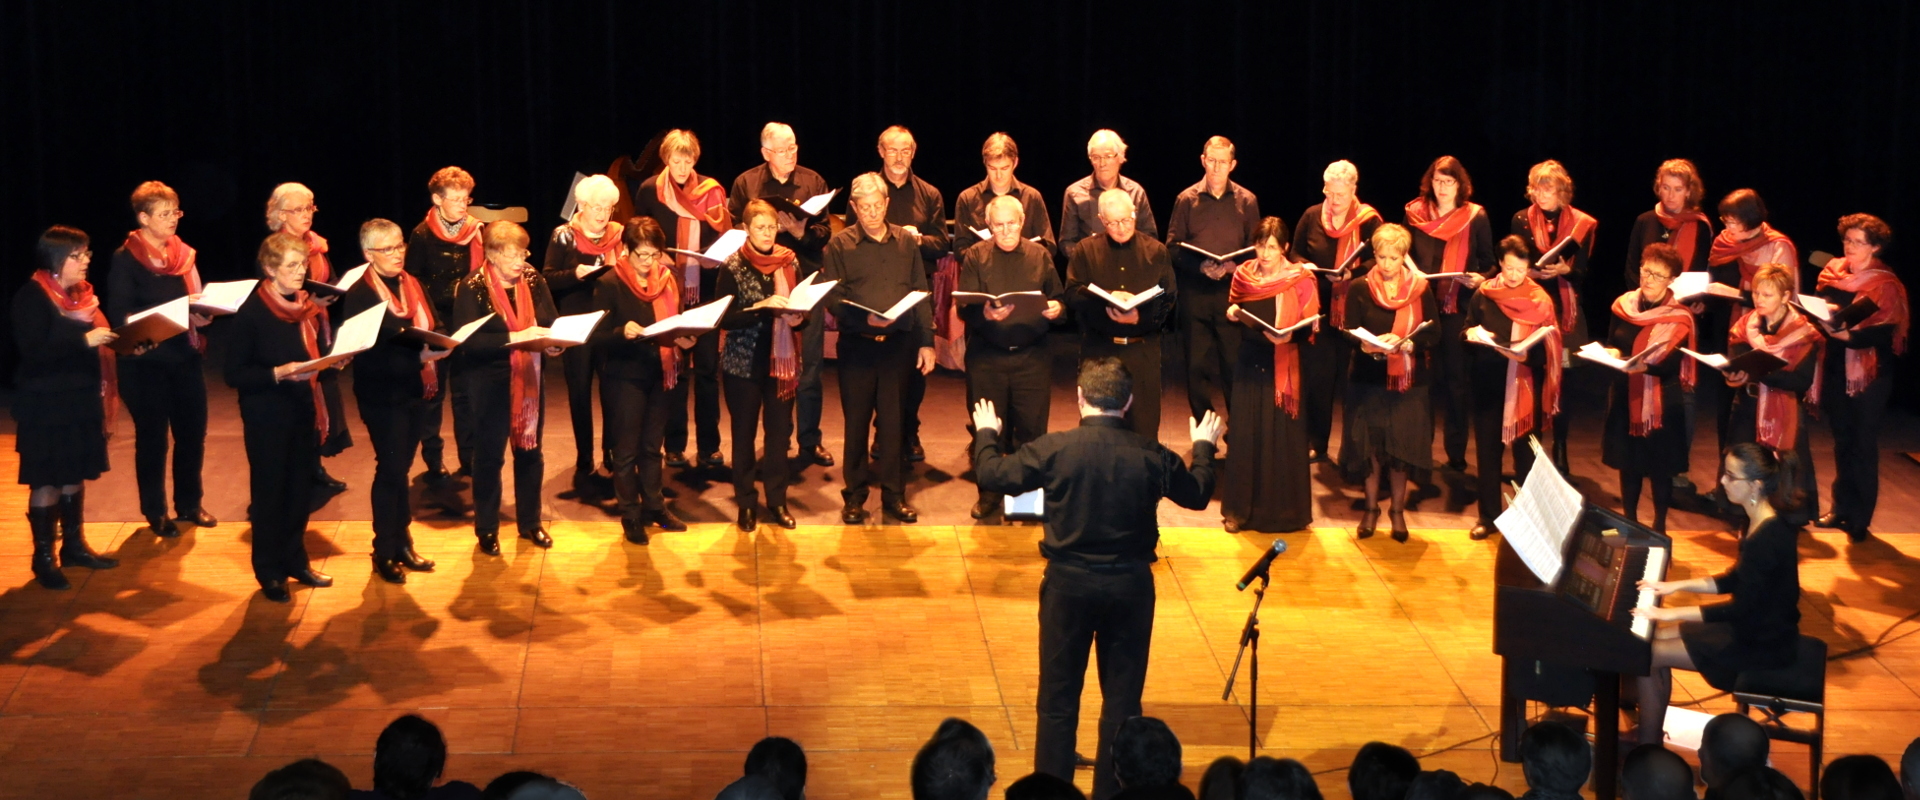 Grand chœur à la Passerelle 2015 